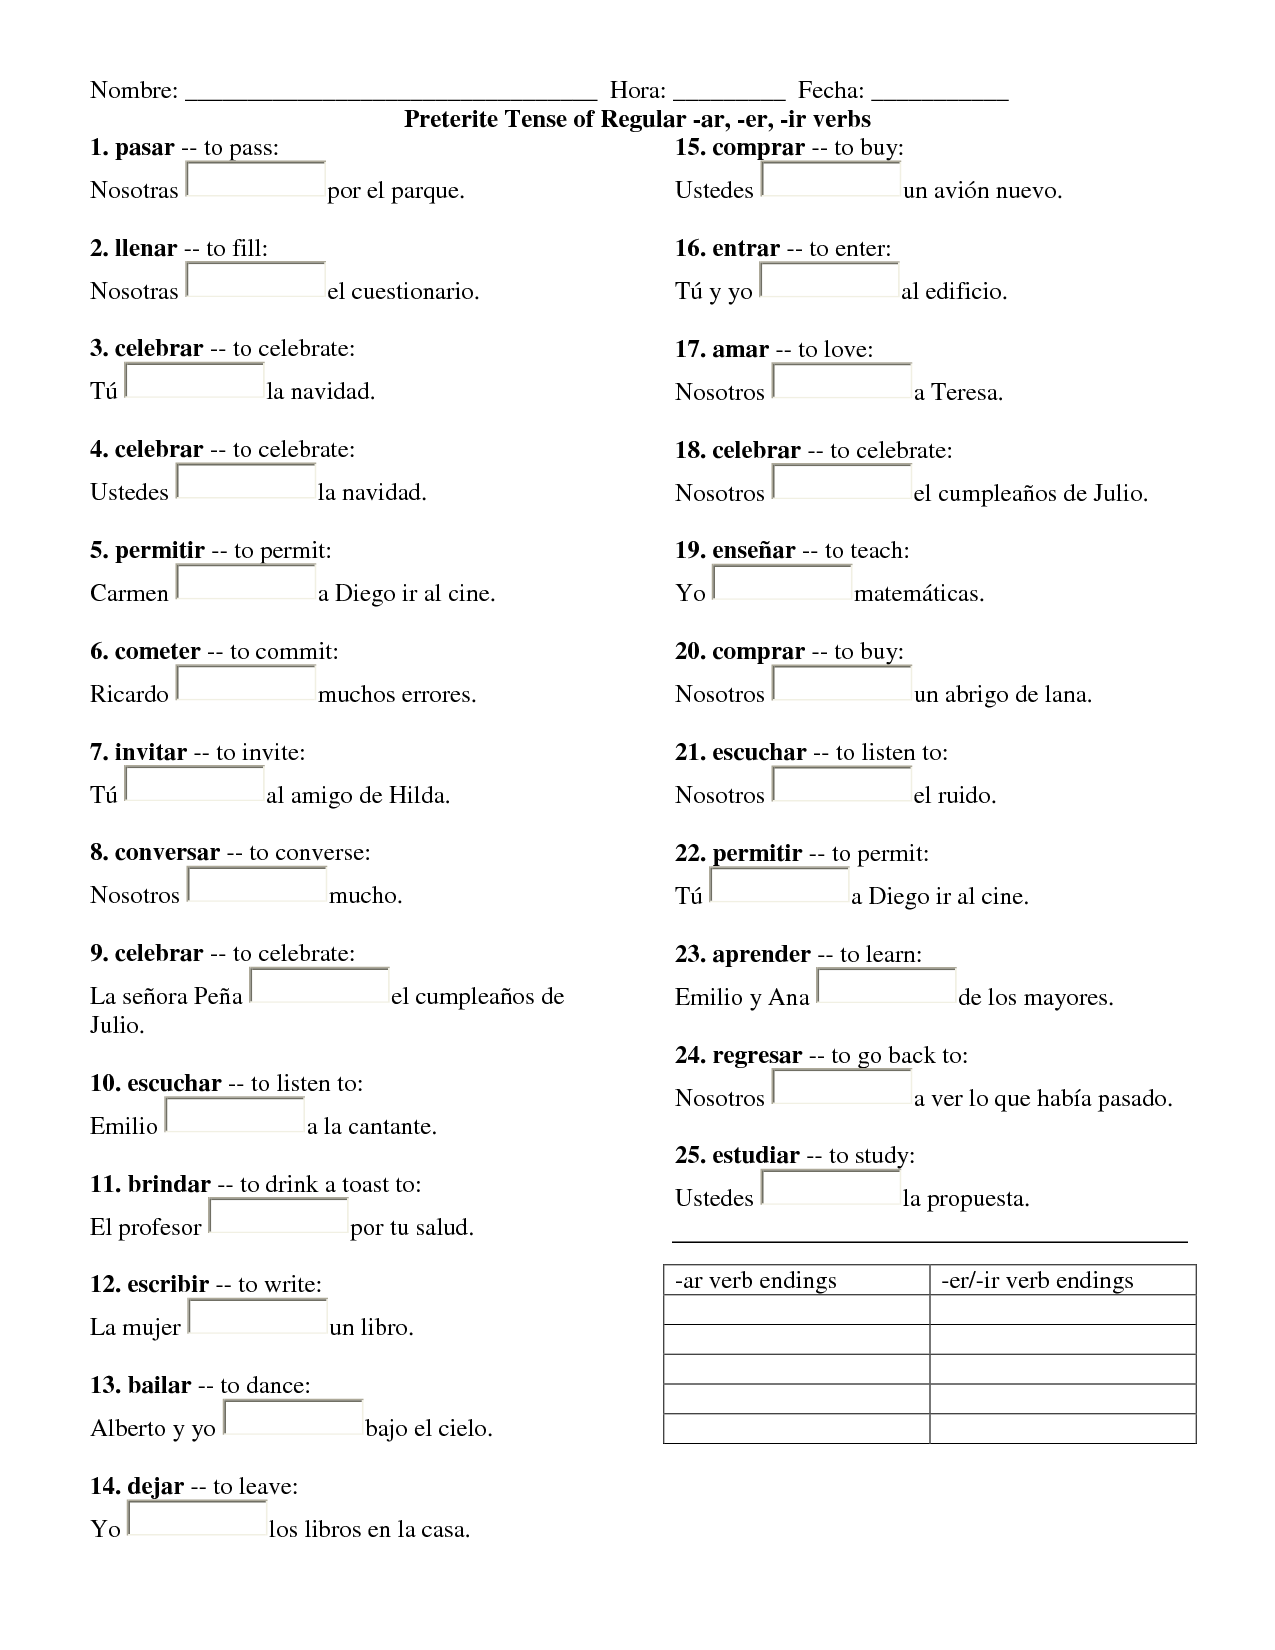 14-best-images-of-spanish-ar-verb-conjugation-worksheet-spanish-ar-verb-conjugation-chart